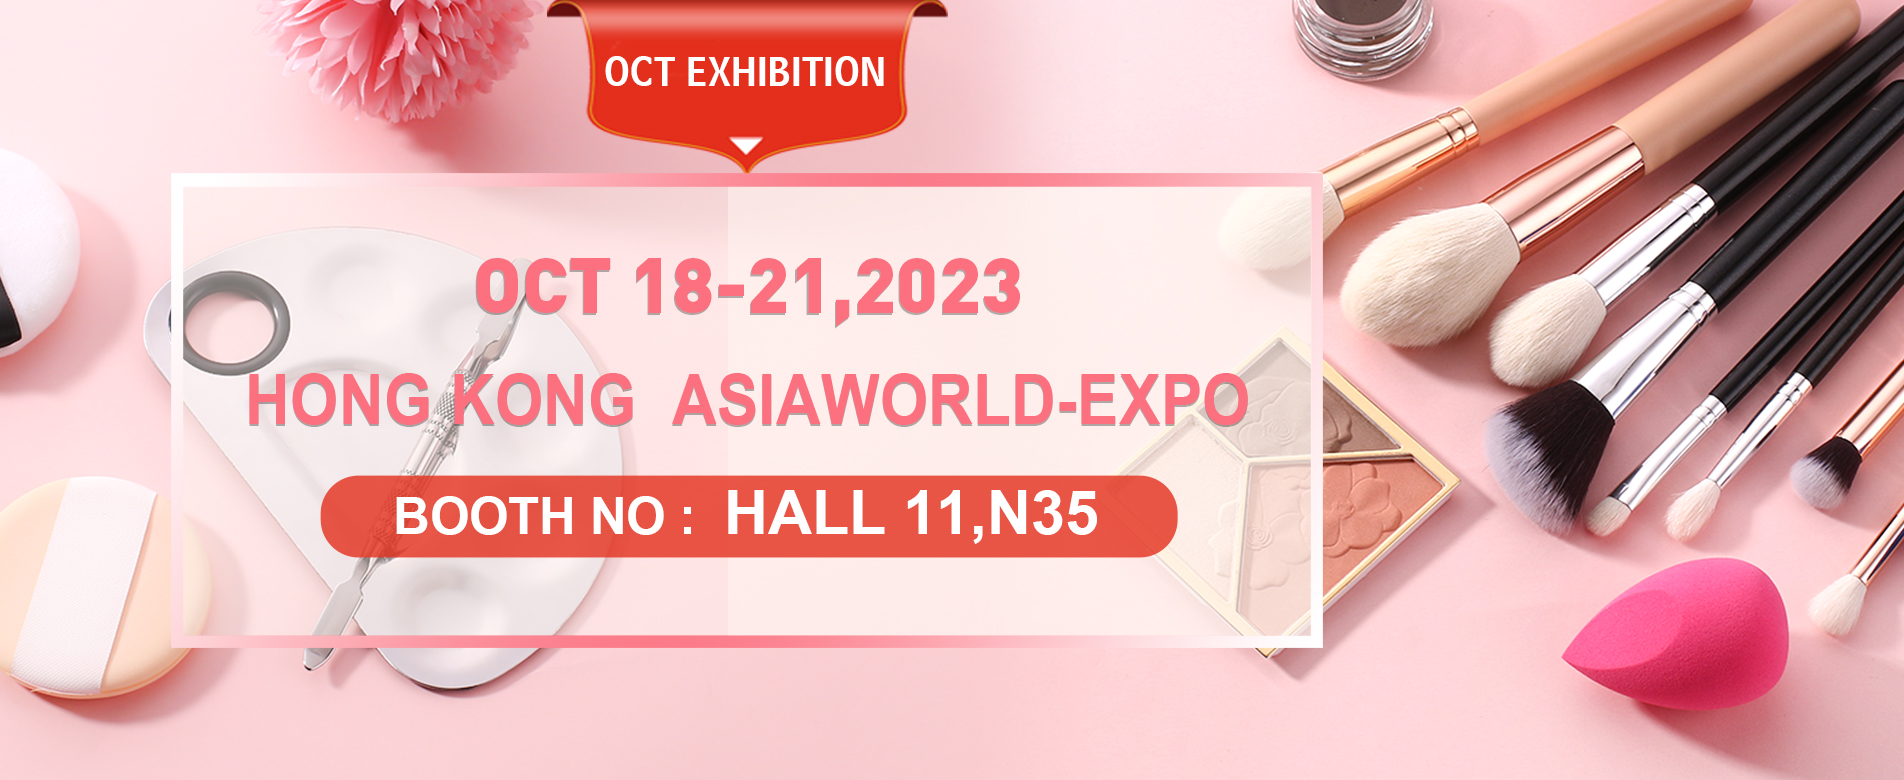 Beili October 18-21, 2023 Asia World Expo, Hong Kong